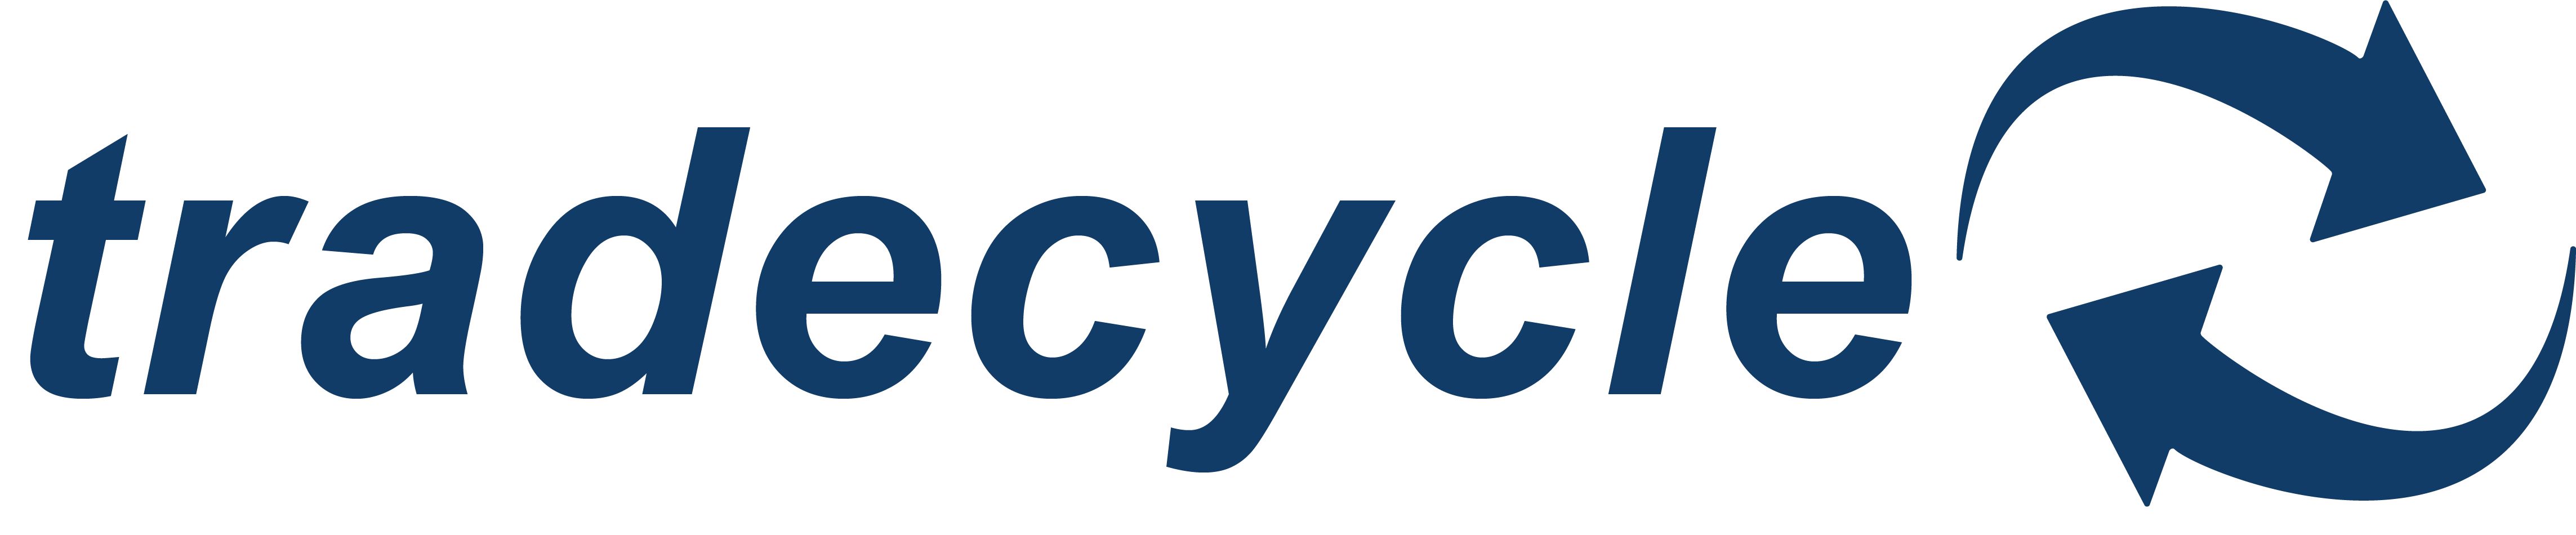 Tradecycle_logo.jpg